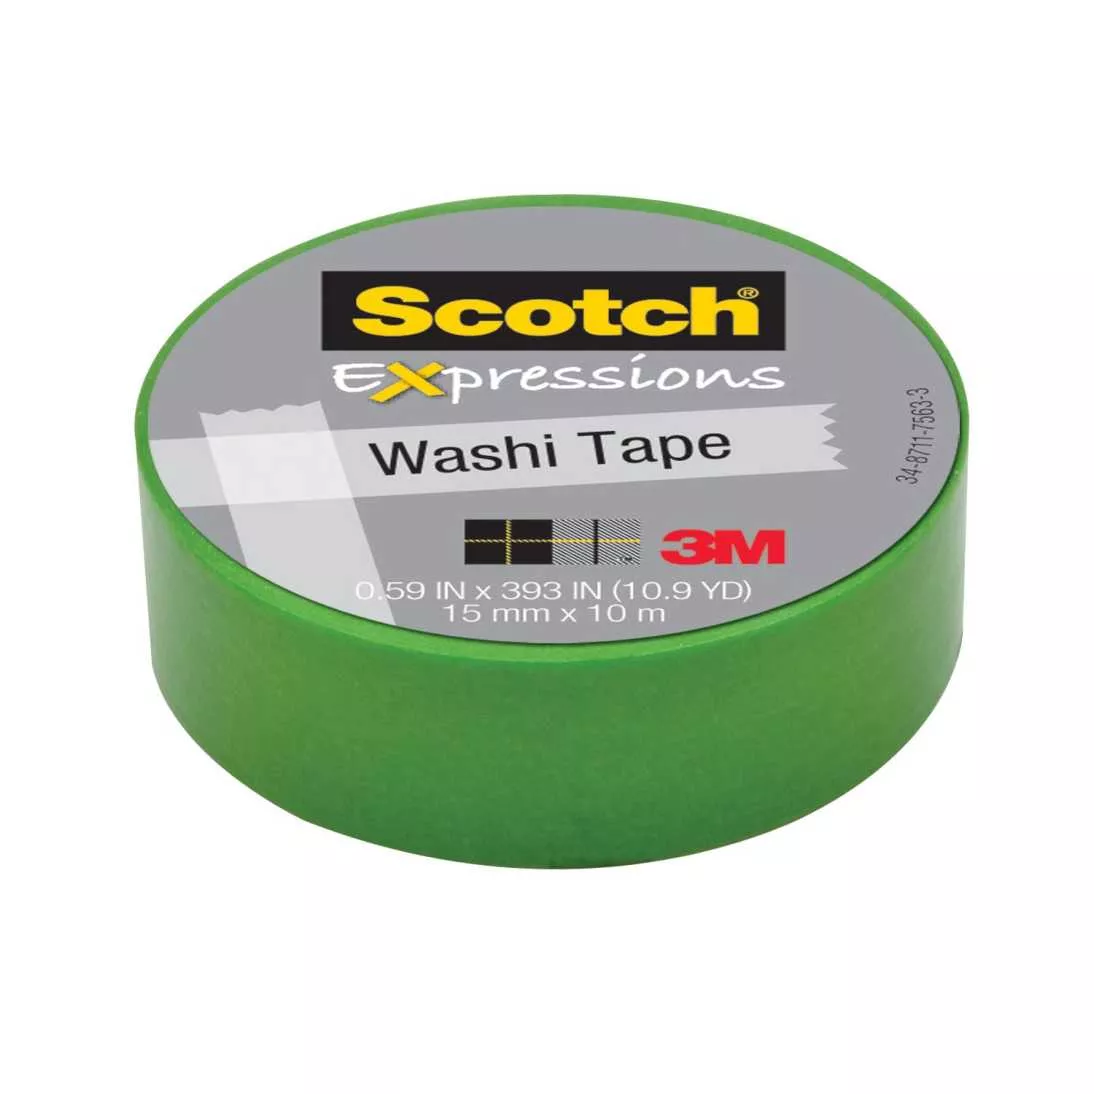 Scotch® Expressions Washi Tape C314-GRN, .59 in x 393 in (15 mm x 10 m)
Green